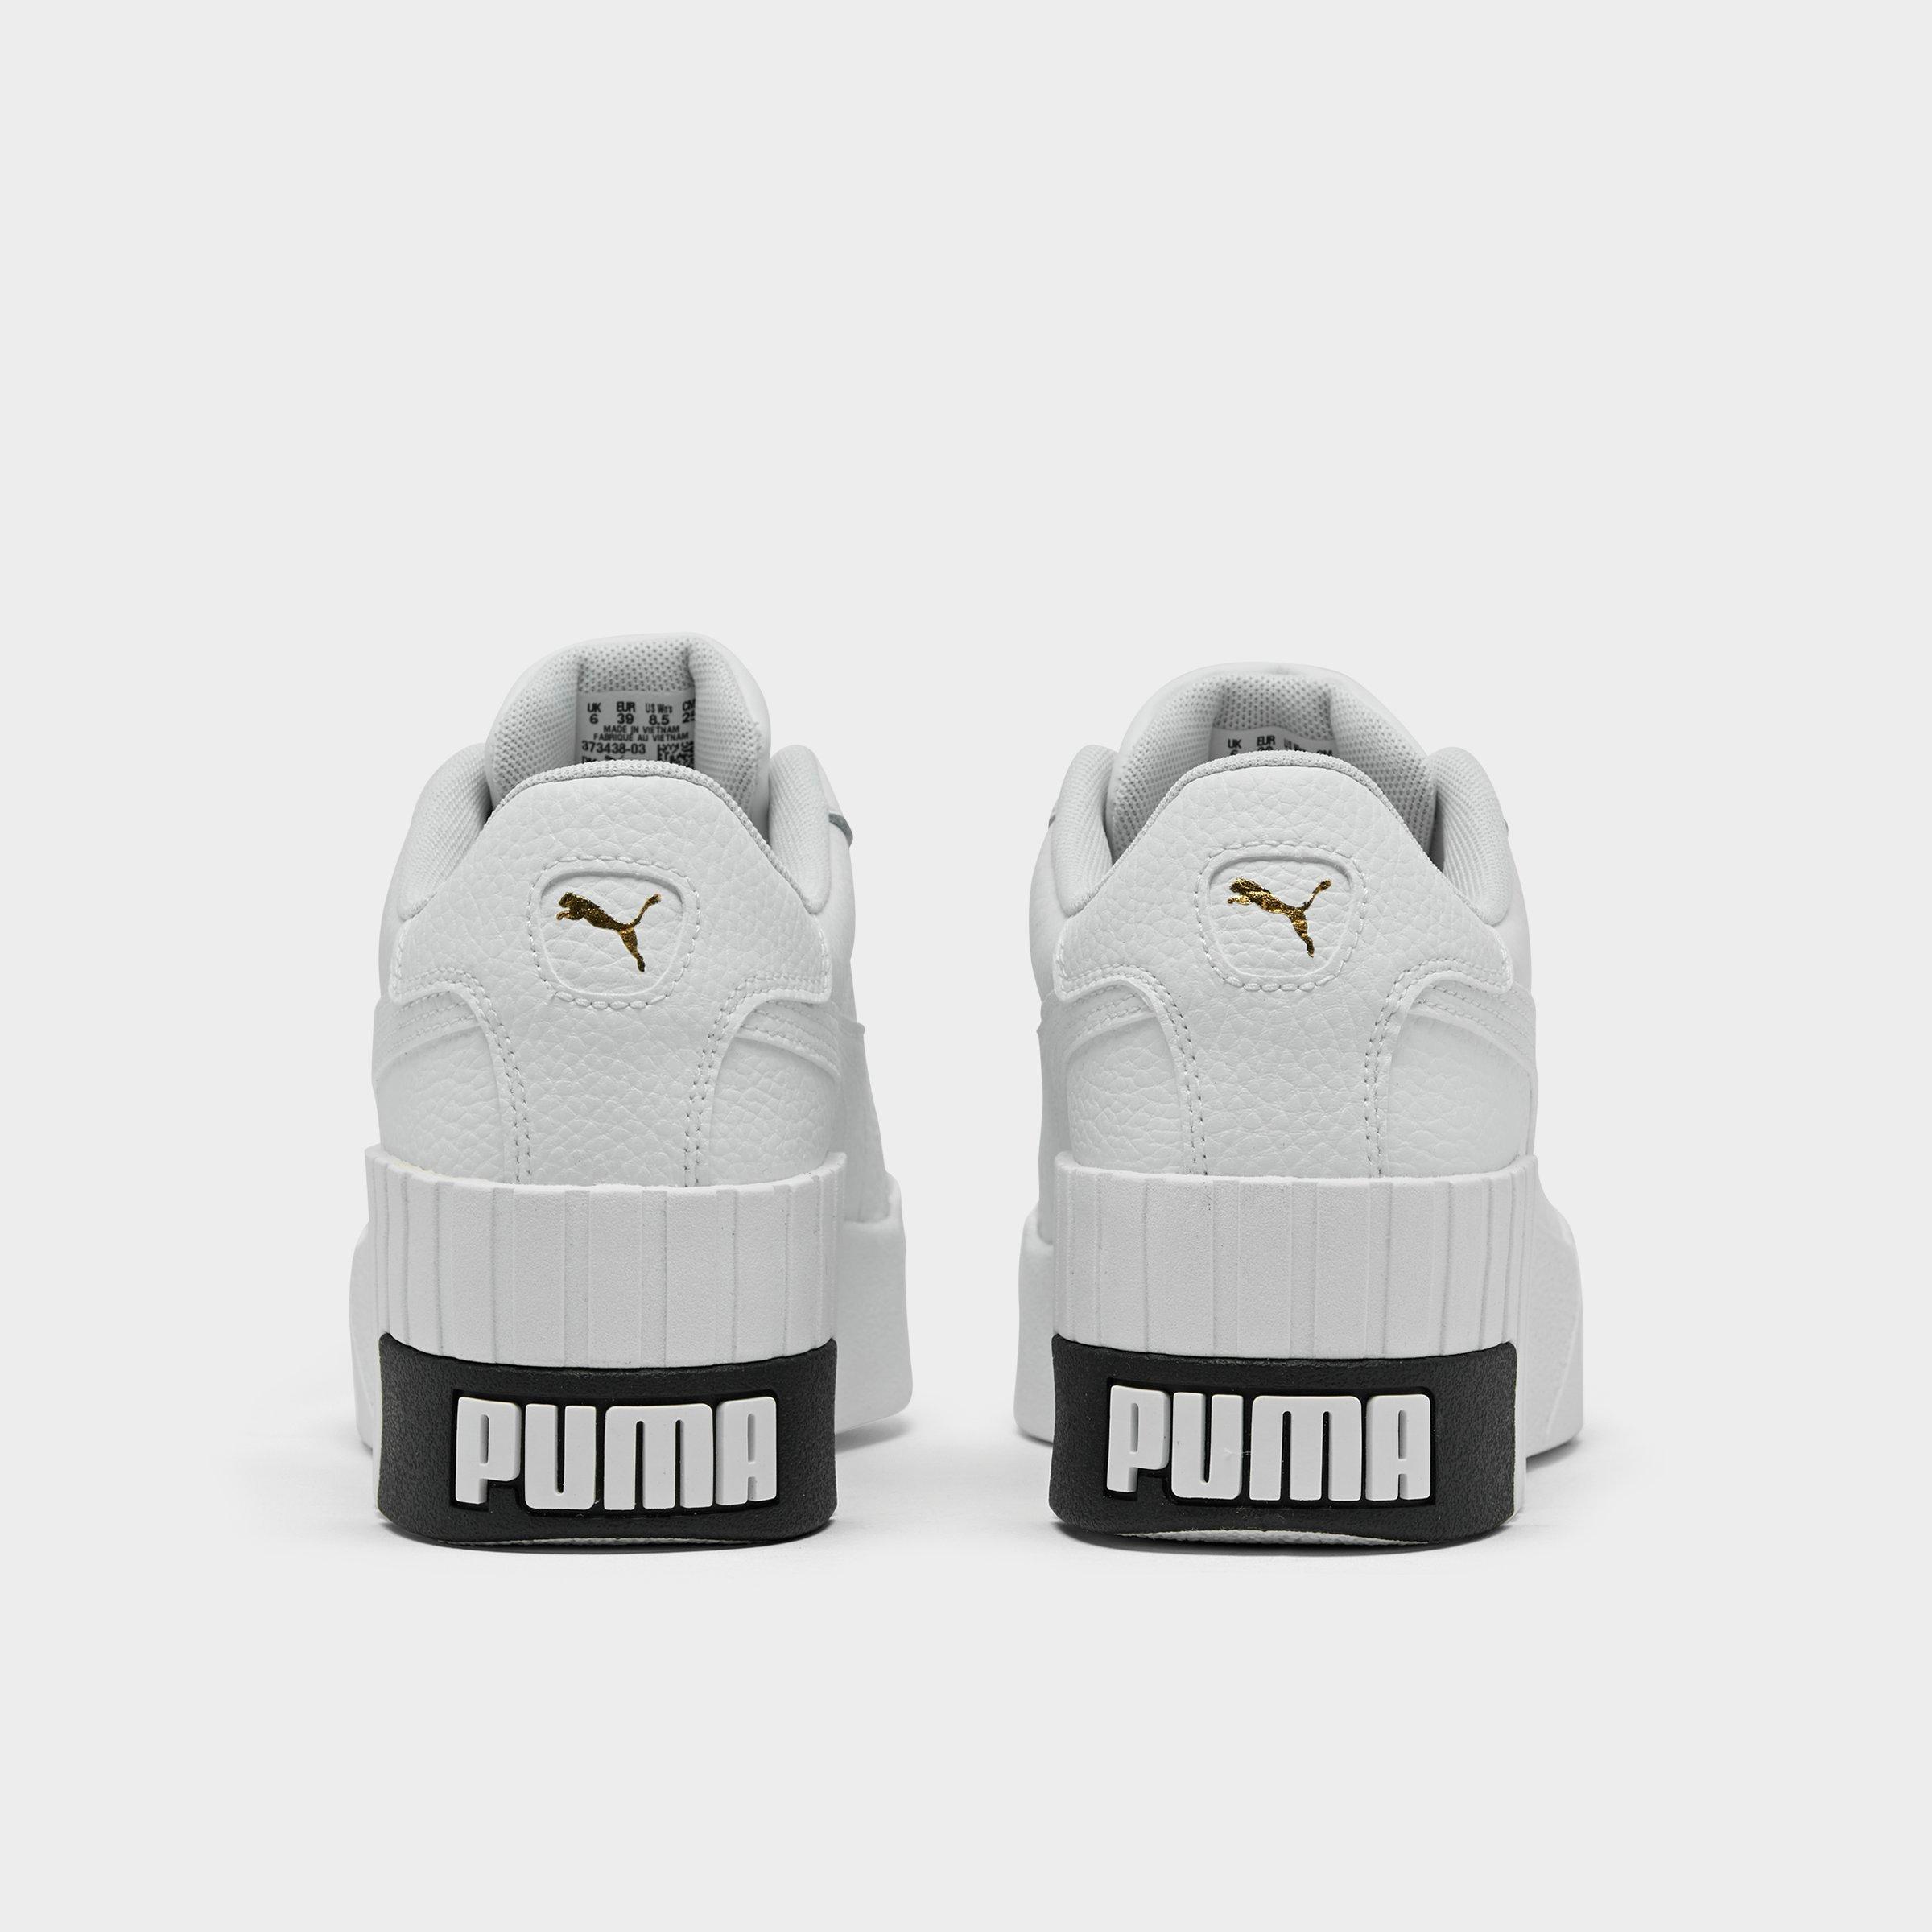 puma wedge shoes